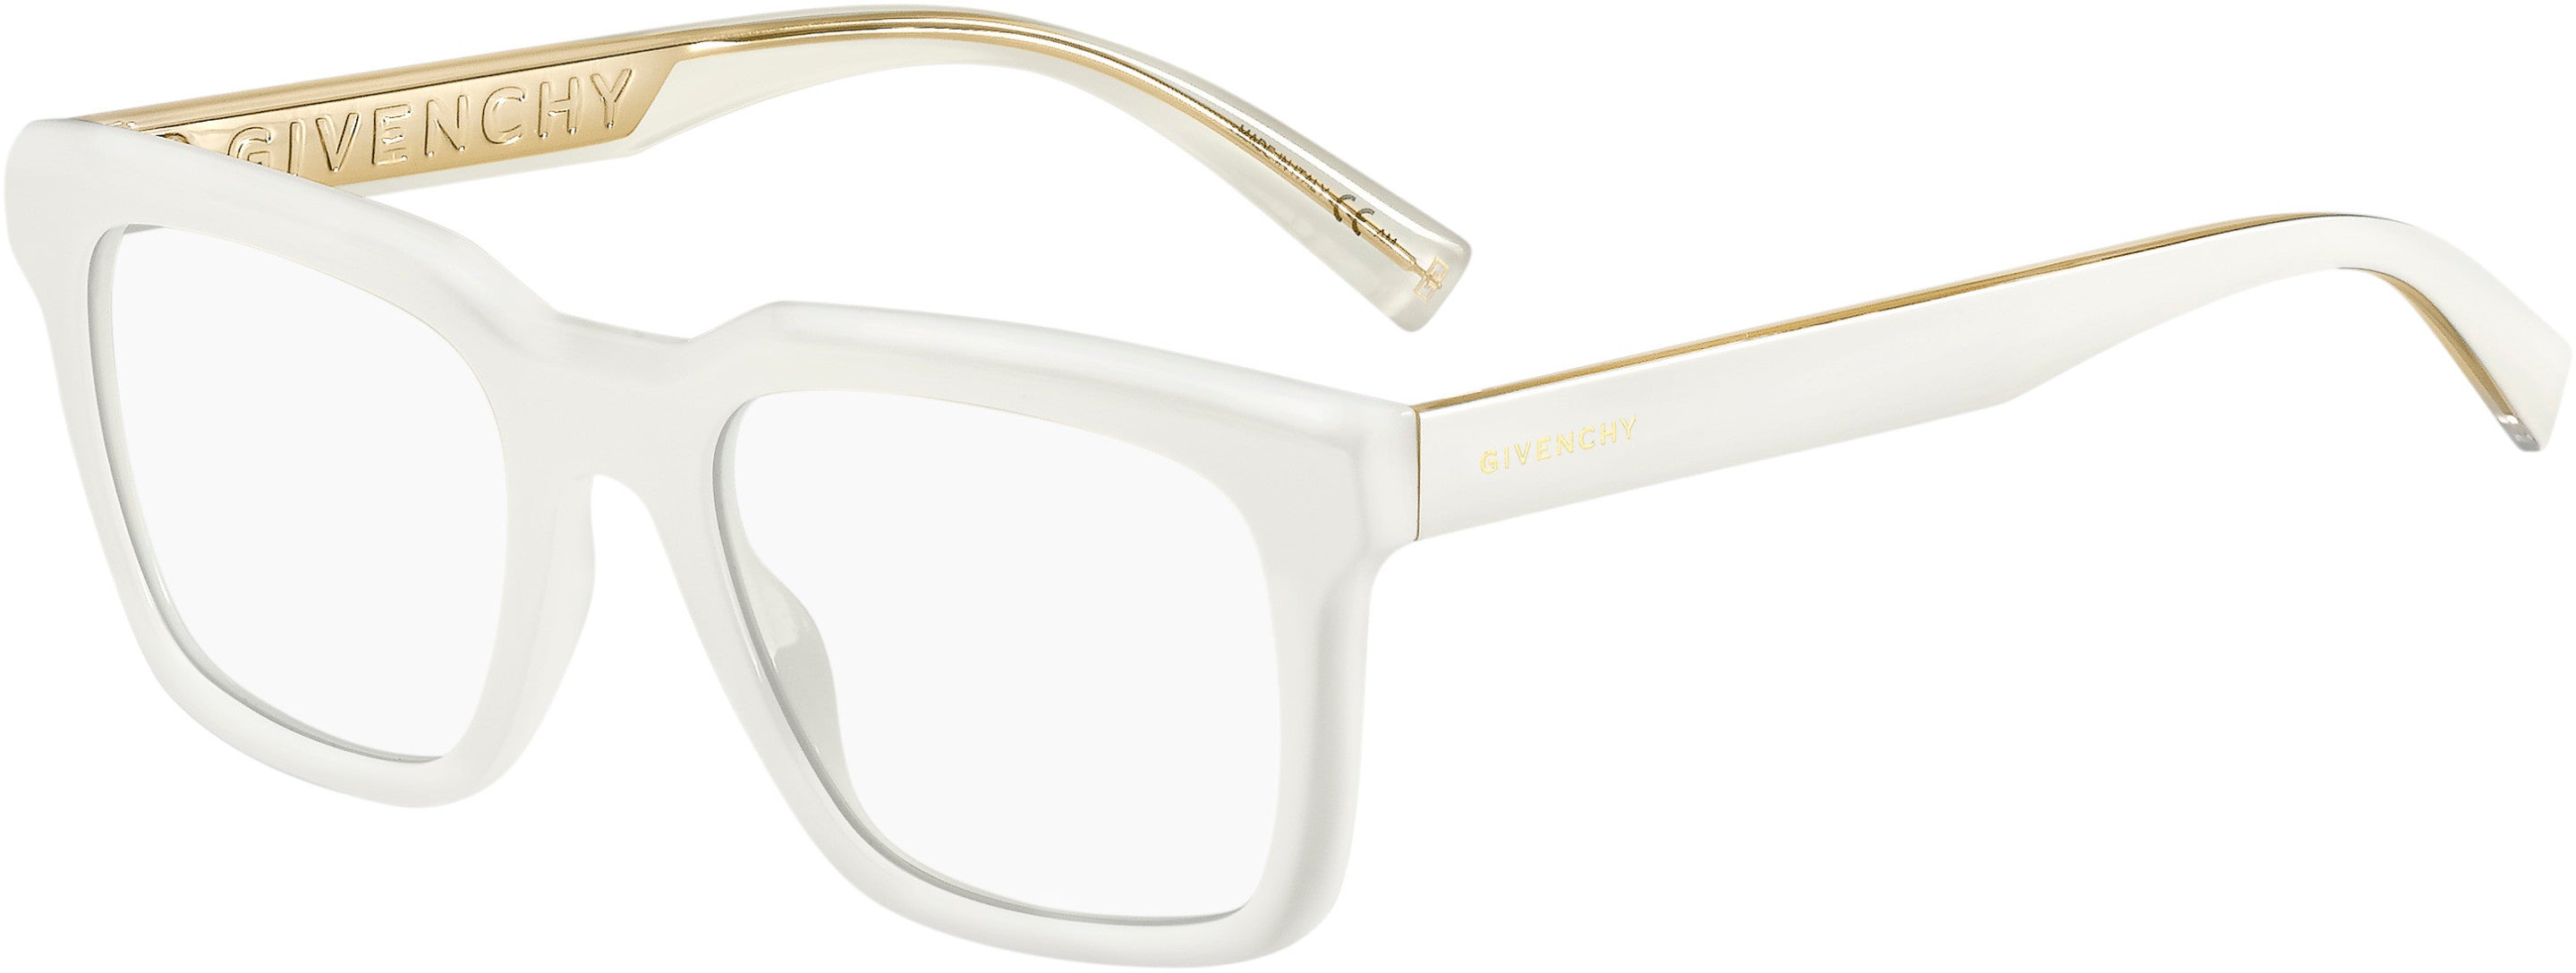  Givenchy 0123 Square Eyeglasses 0VK6-0VK6  White (00 Demo Lens)